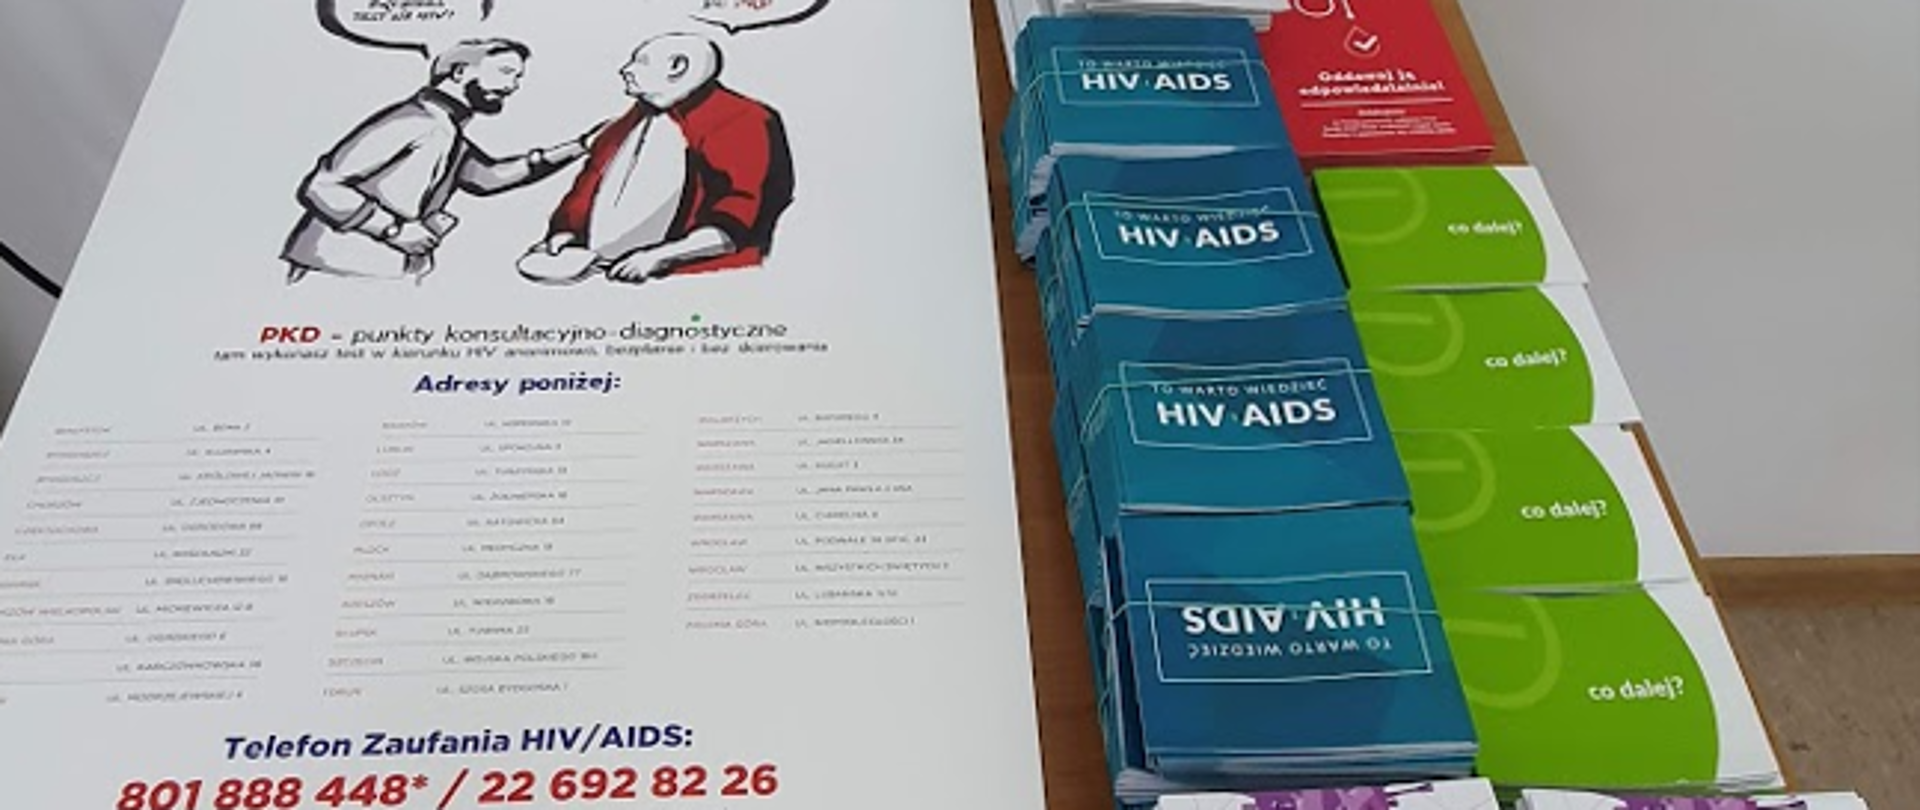 Publikacje HIV AIDS